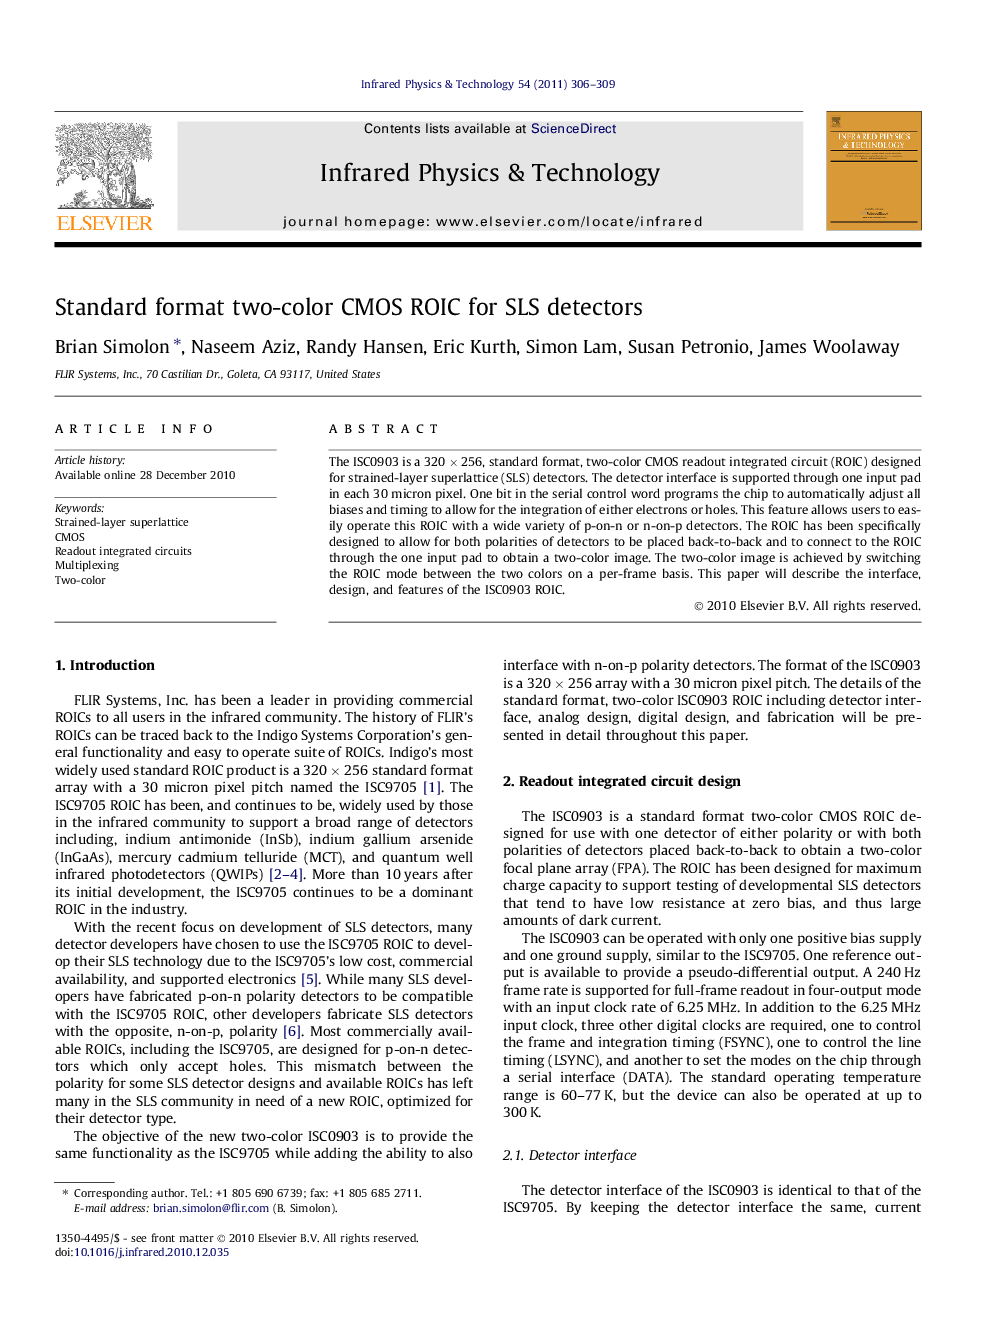 Standard format two-color CMOS ROIC for SLS detectors